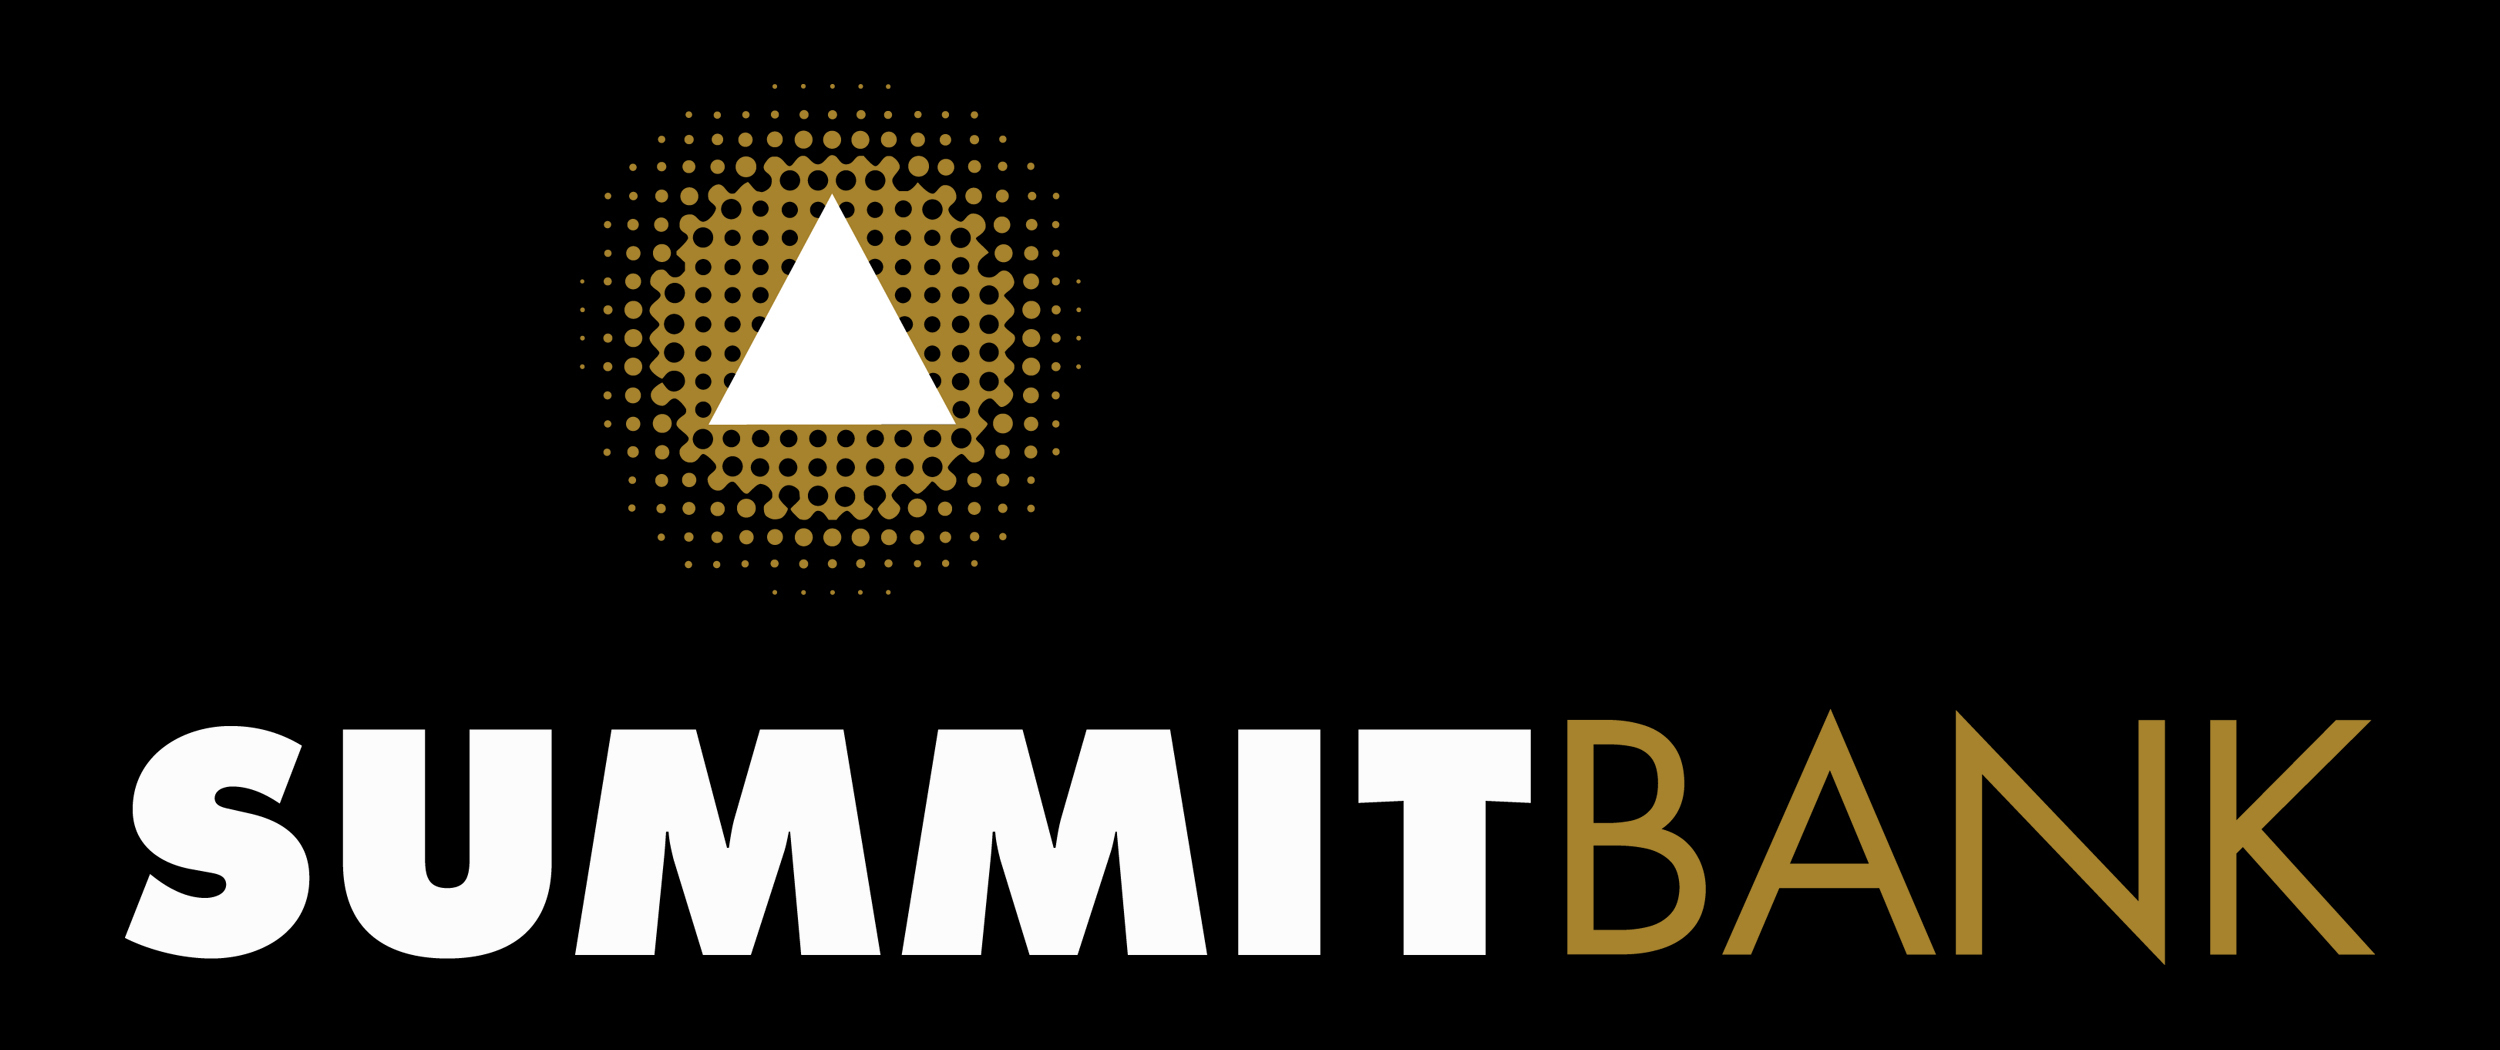 Саммит банк